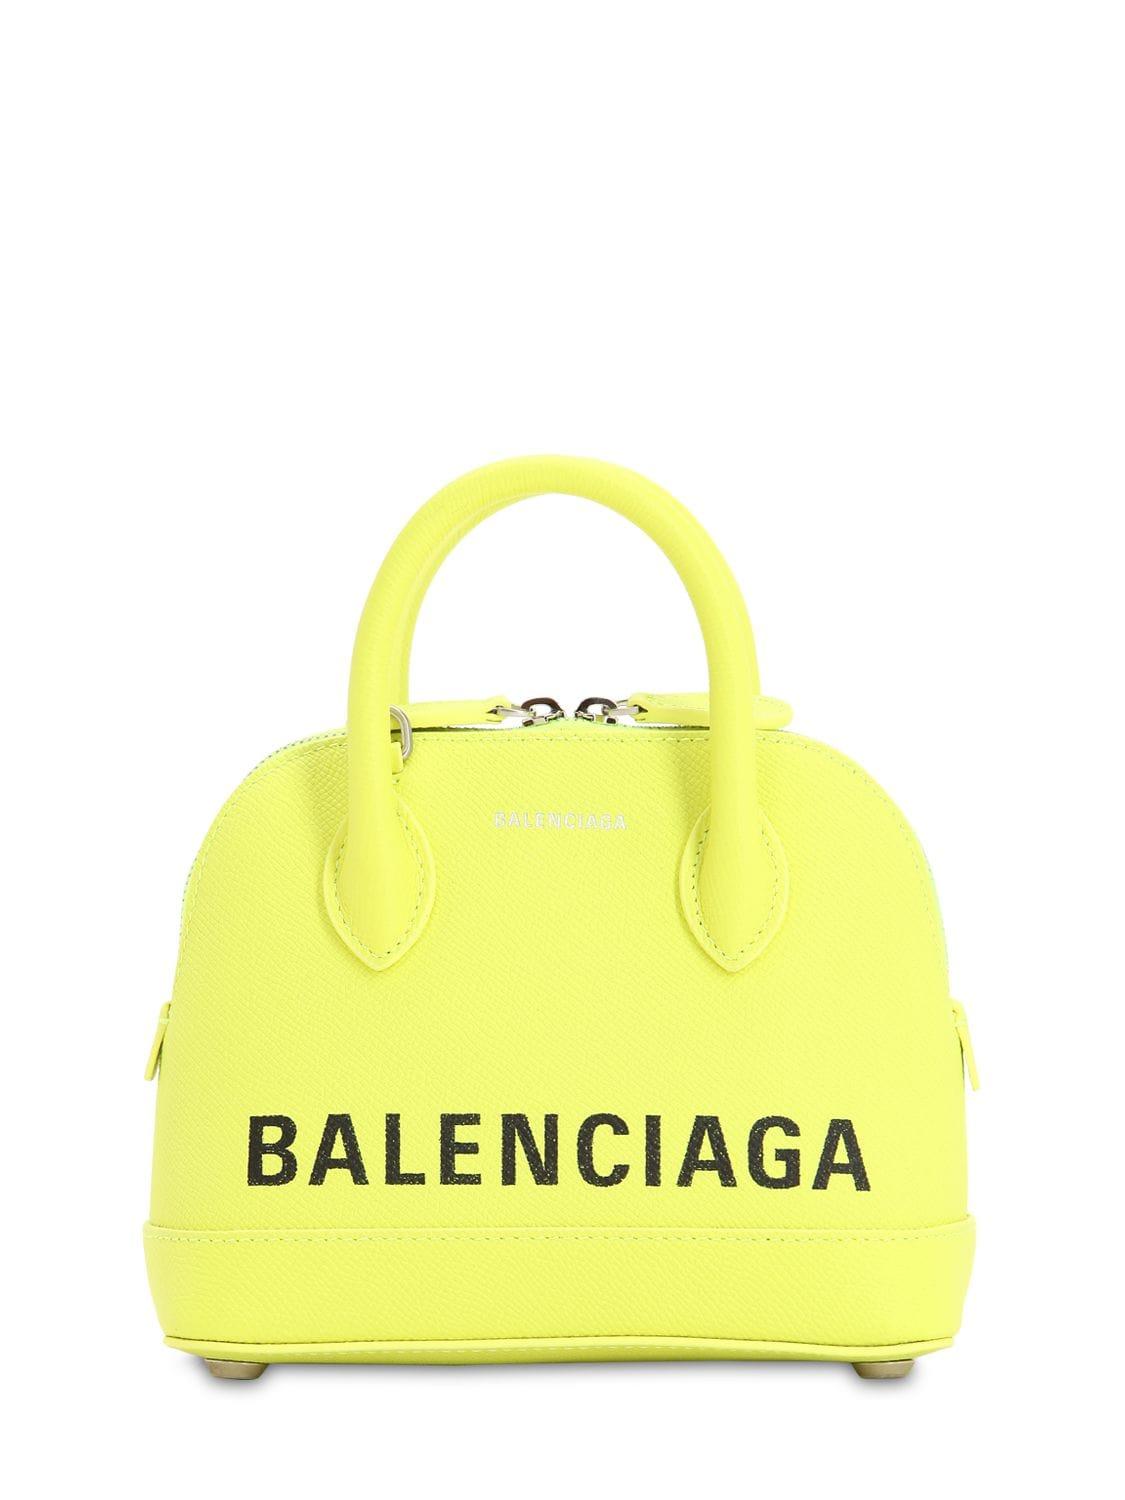 Balenciaga Xxs Ville Textured Leather Bag in Acid Green (Yellow) | Lyst